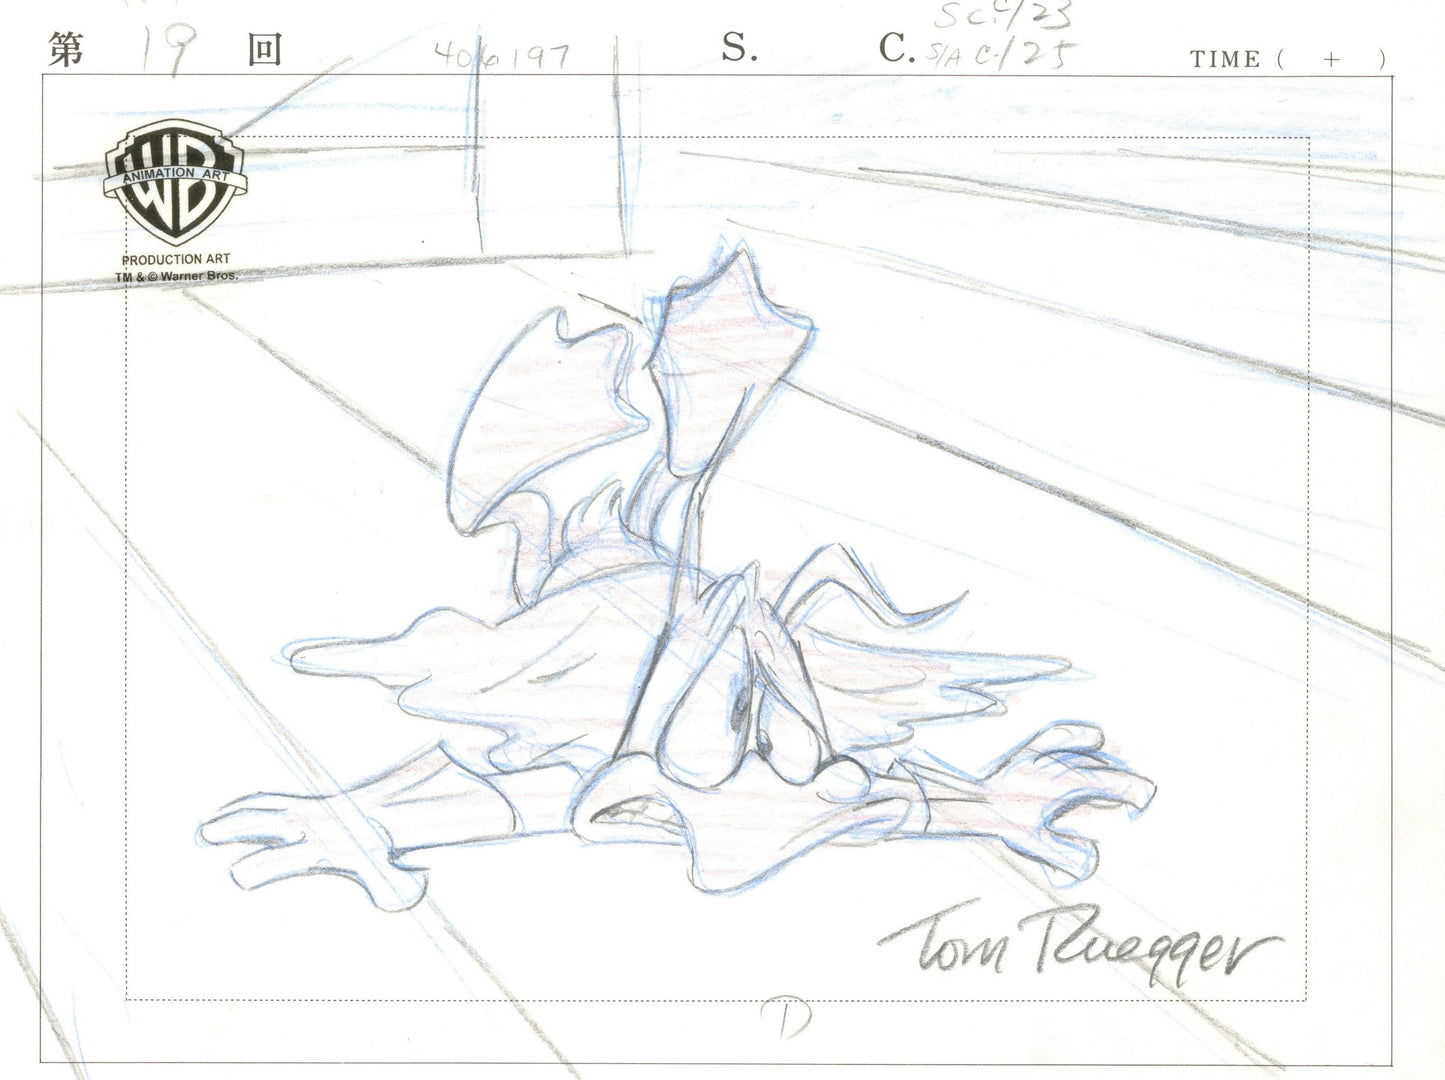 Tiny Toons Original Production Drawing Signed by Tom Ruegger: Batduck